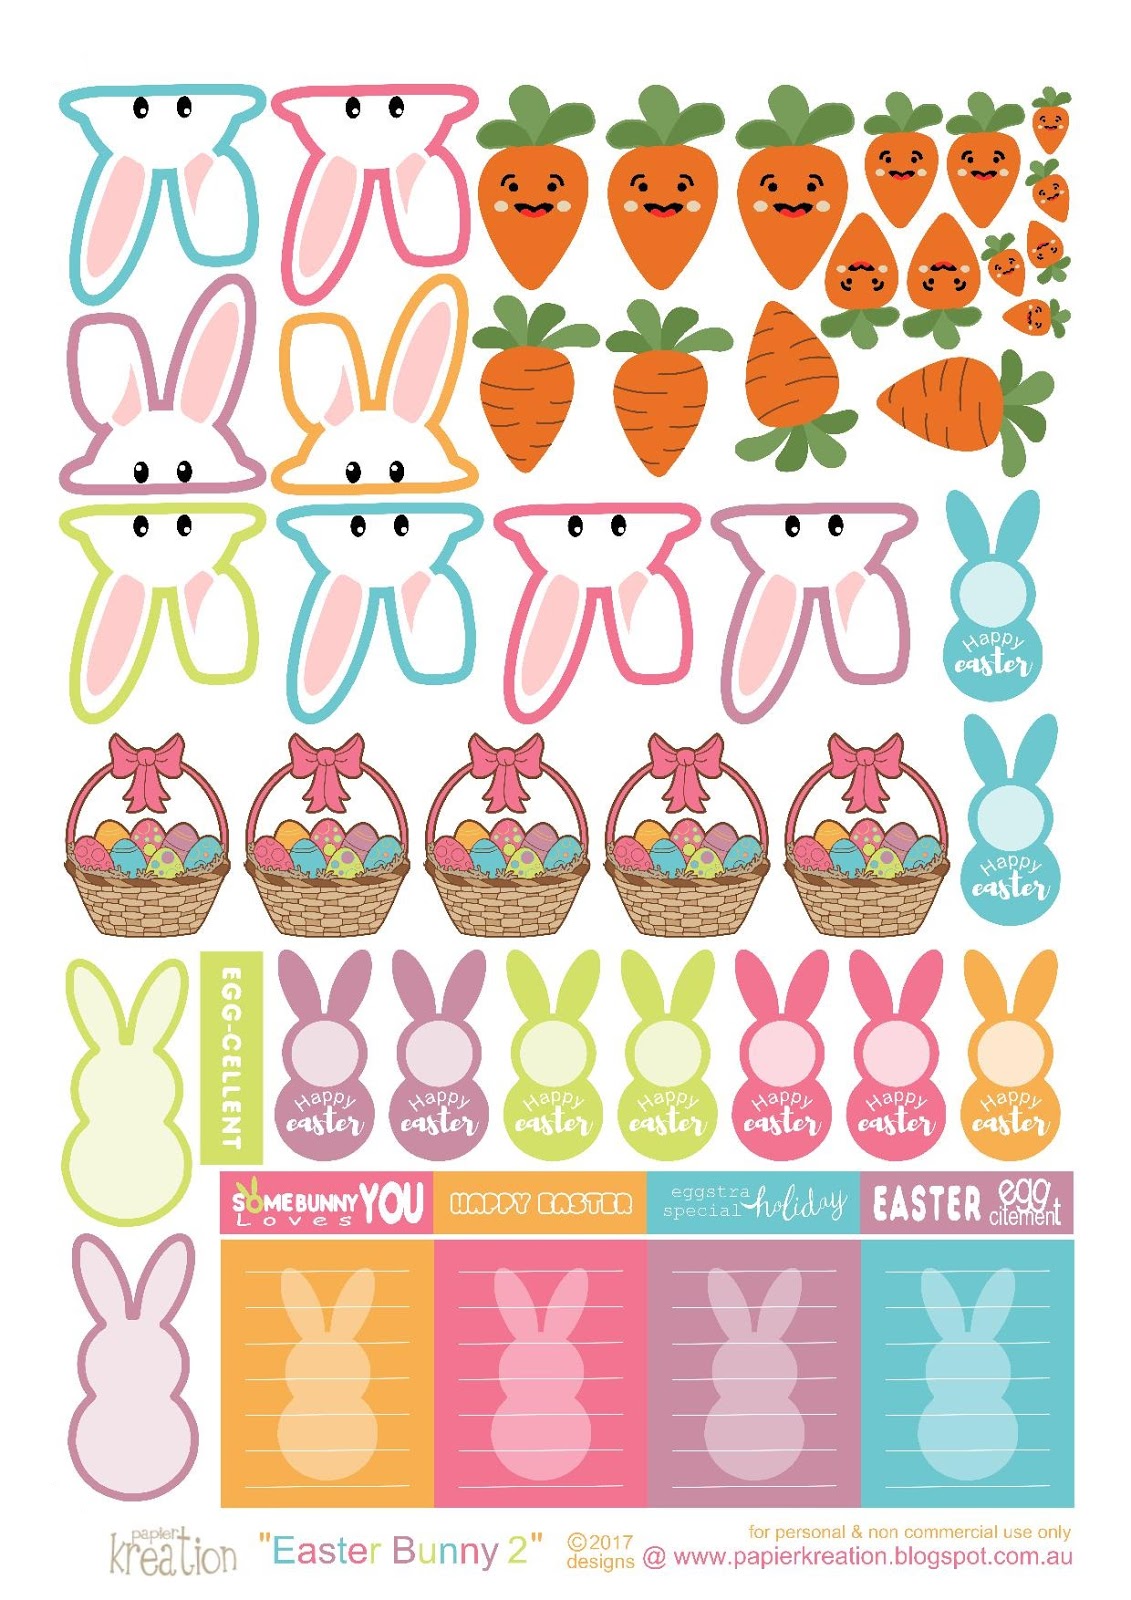 papier kreation Easter Bunny Printables Planner Sticker Part 2